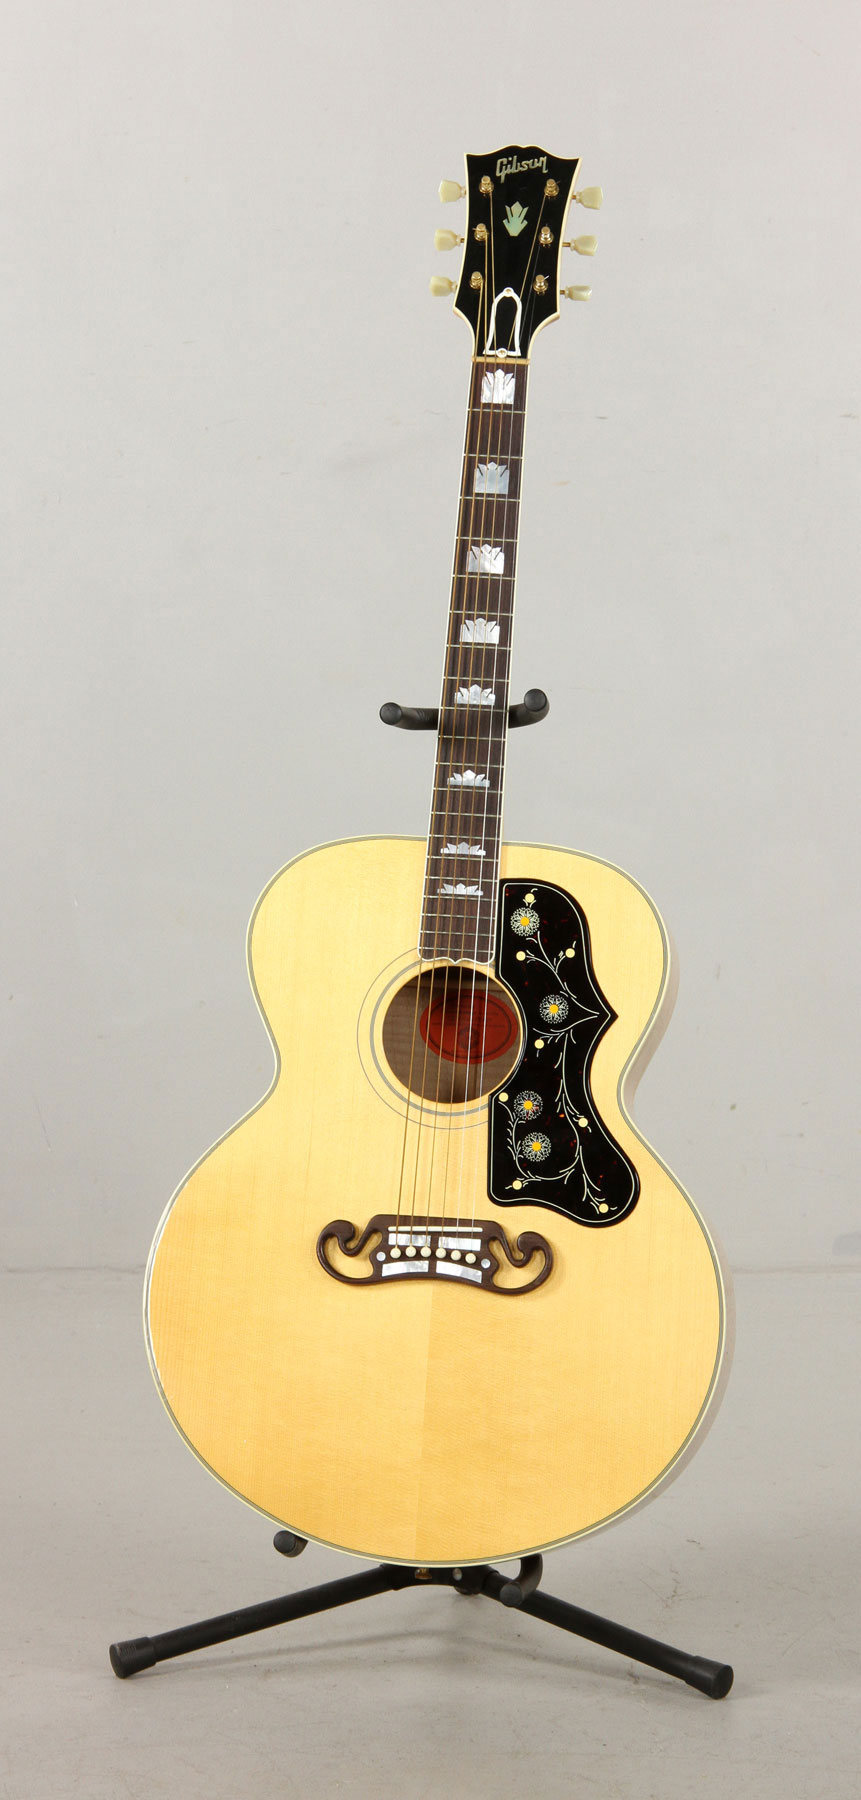 Rex Trailer's 1997 Gibson Acoustic Guitar